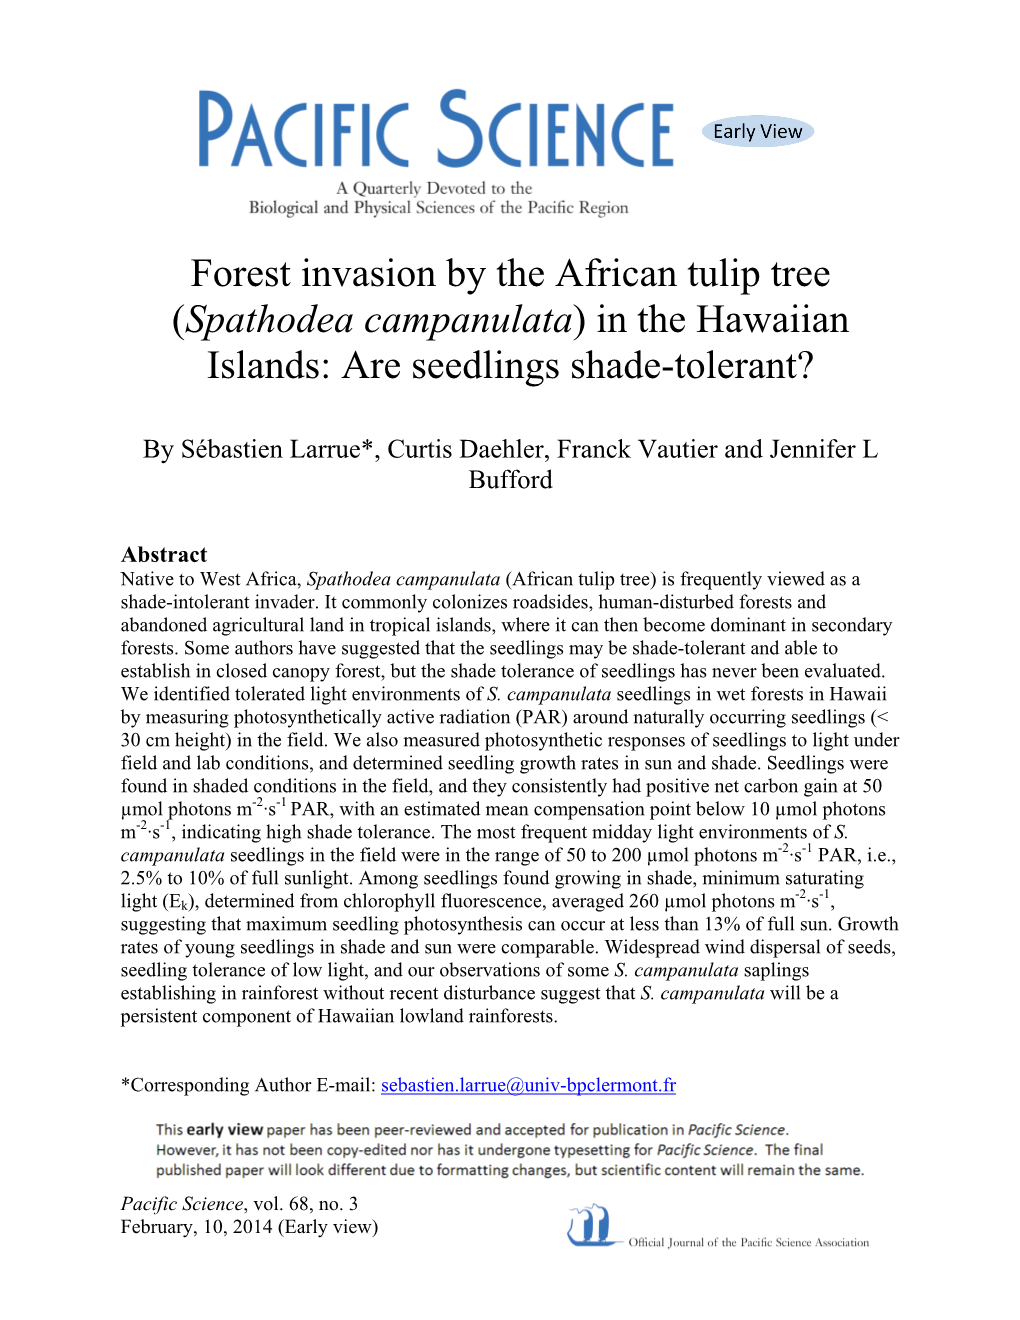 Spathodea Campanulata) in the Hawaiian Islands: Are Seedlings Shade-Tolerant?